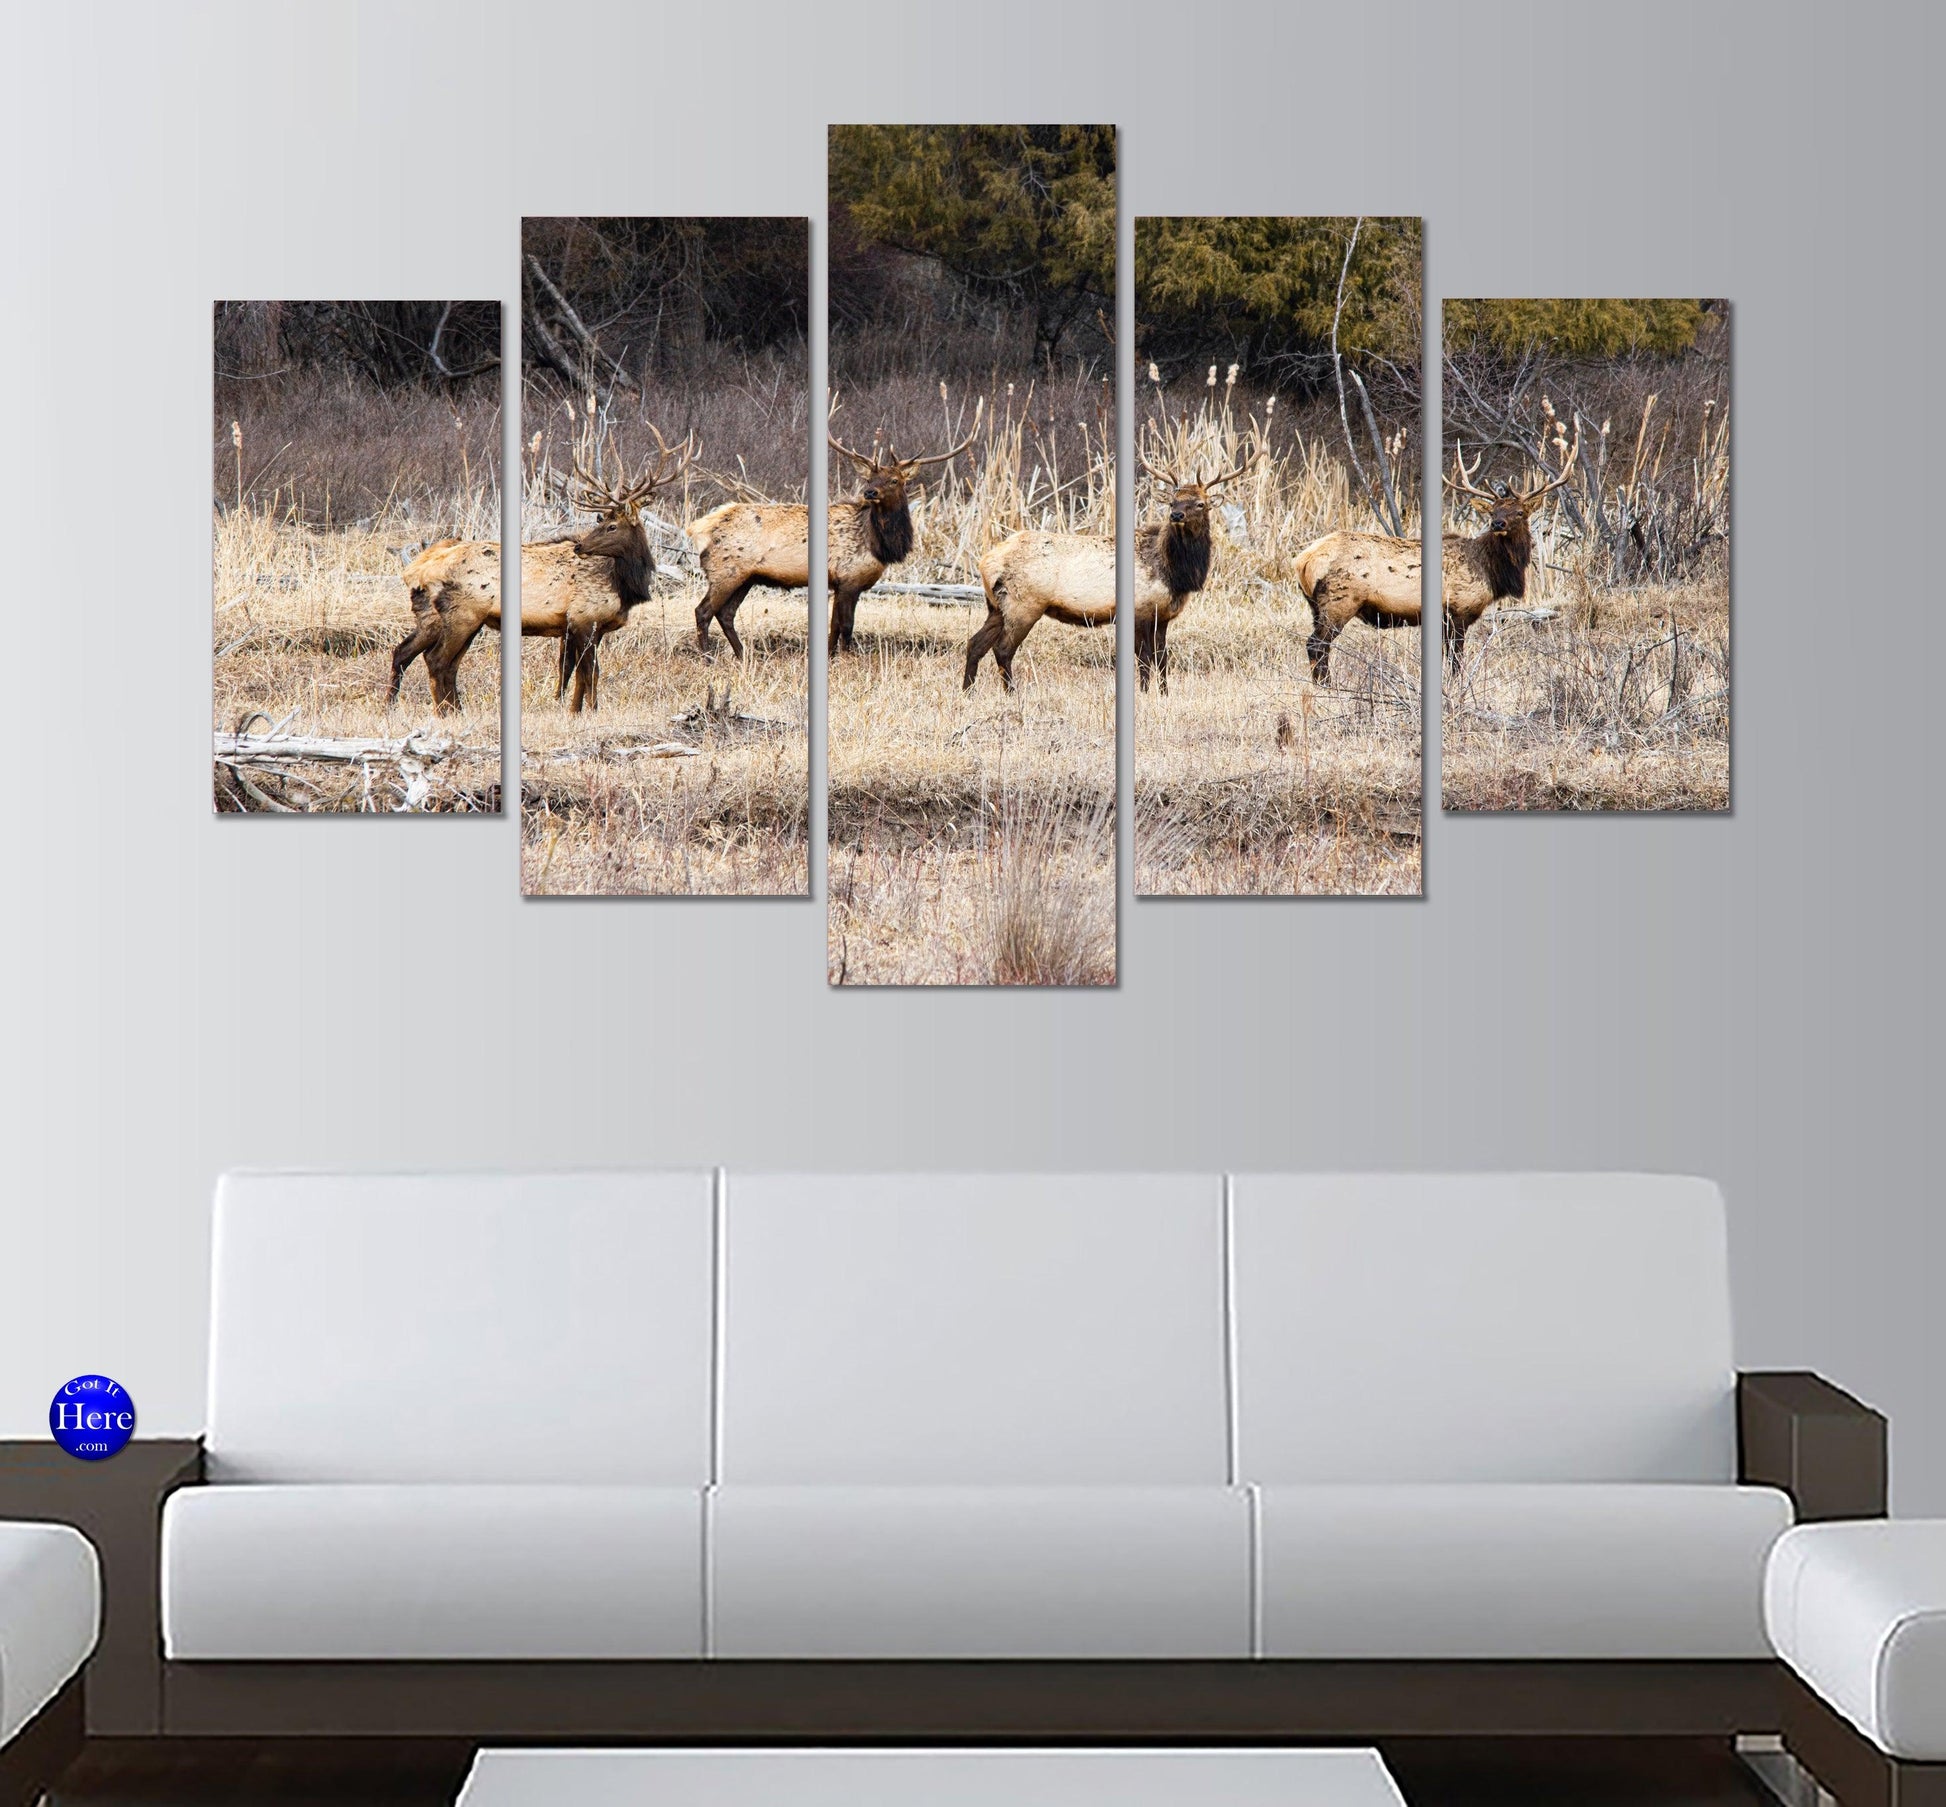 Elk On The Grassland - Charlo Montana 5 Panel Canvas Print Wall Art - GotItHere.com